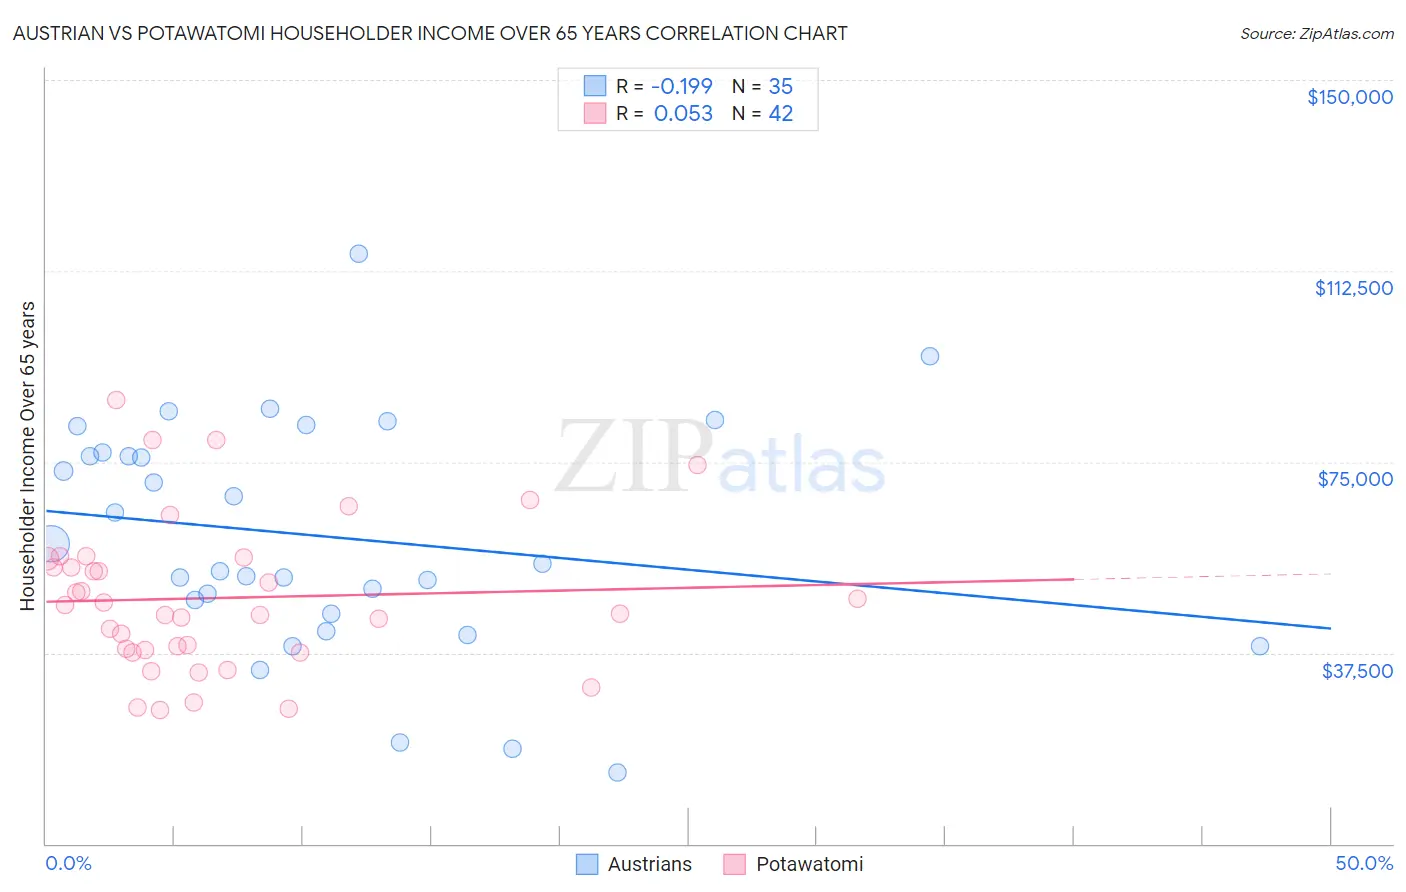 Austrian vs Potawatomi Householder Income Over 65 years